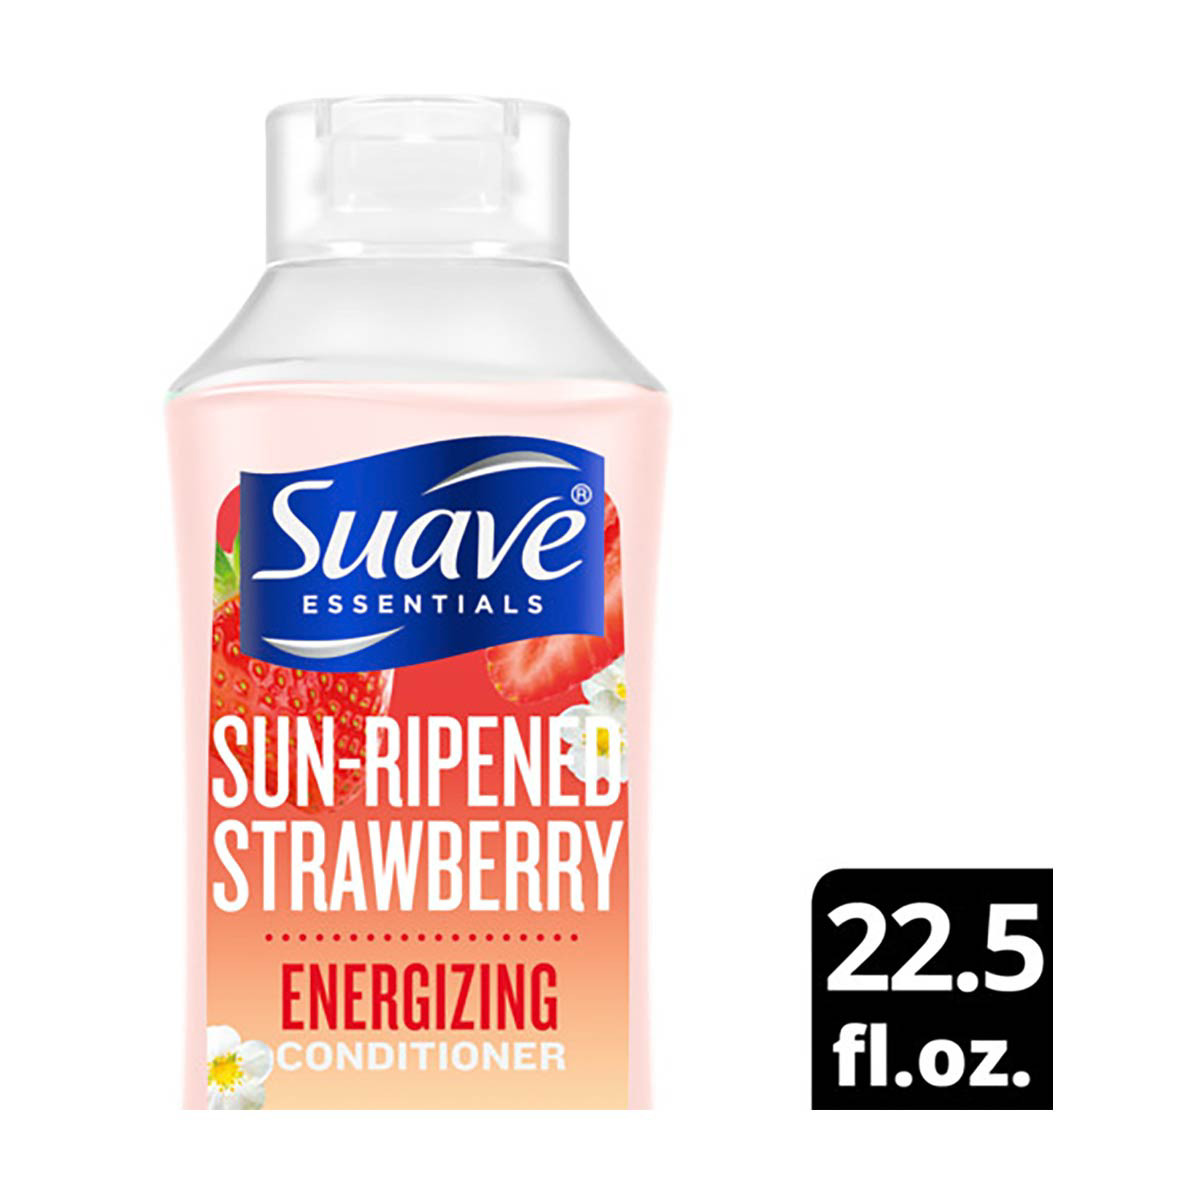 Suave Essentials Strawberry Energizing Conditioner, 22.5 fl oz